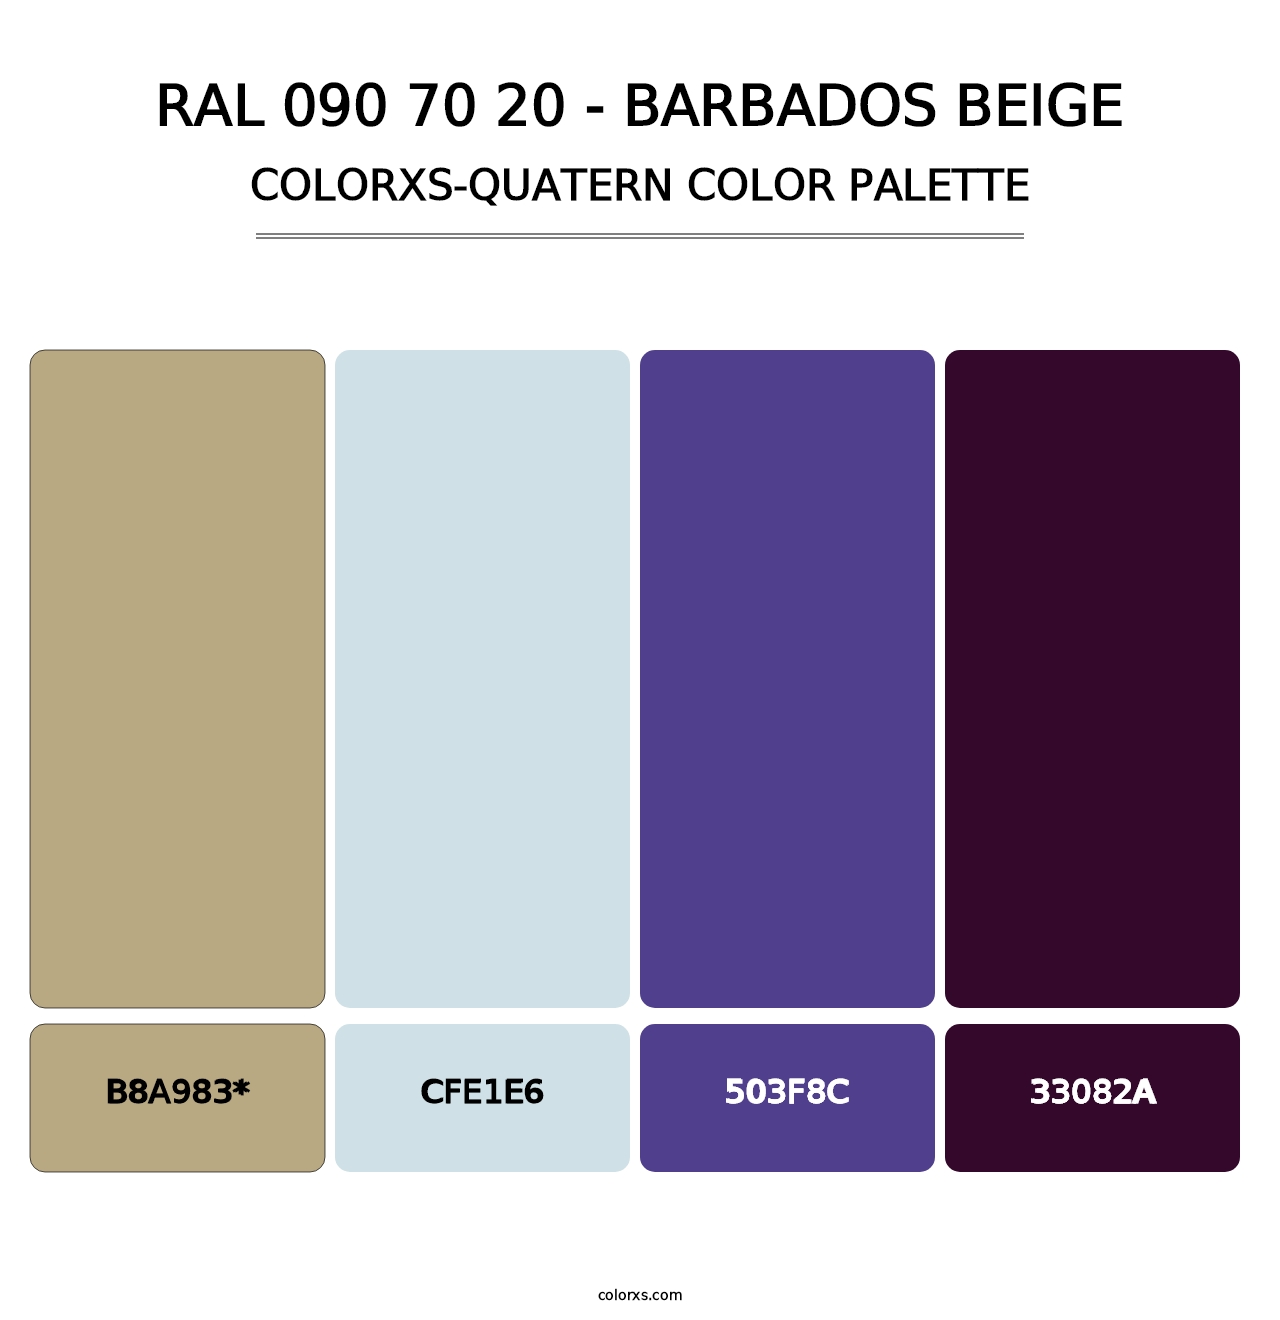 RAL 090 70 20 - Barbados Beige - Colorxs Quatern Palette